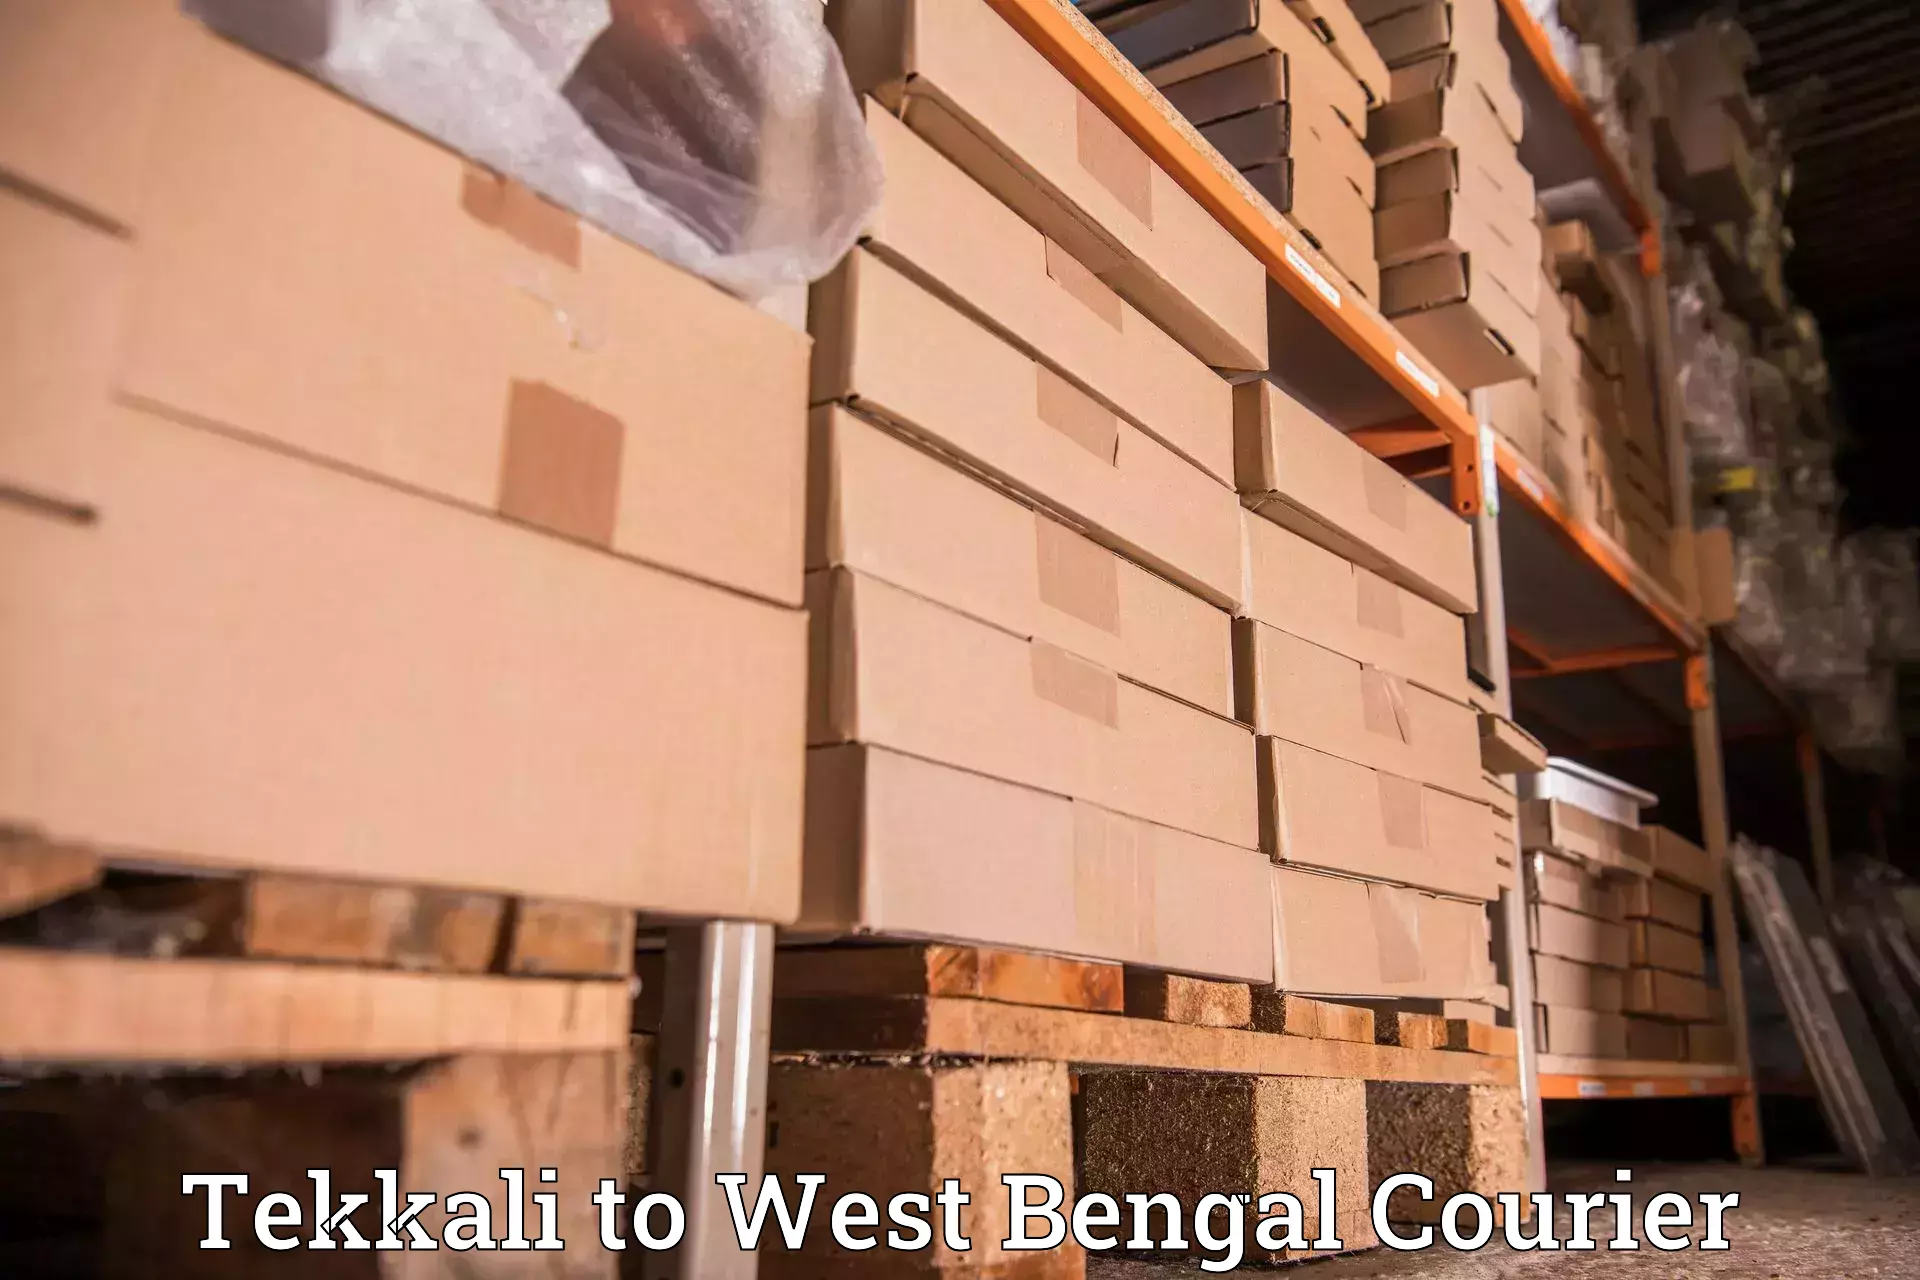 Courier service comparison Tekkali to West Bengal